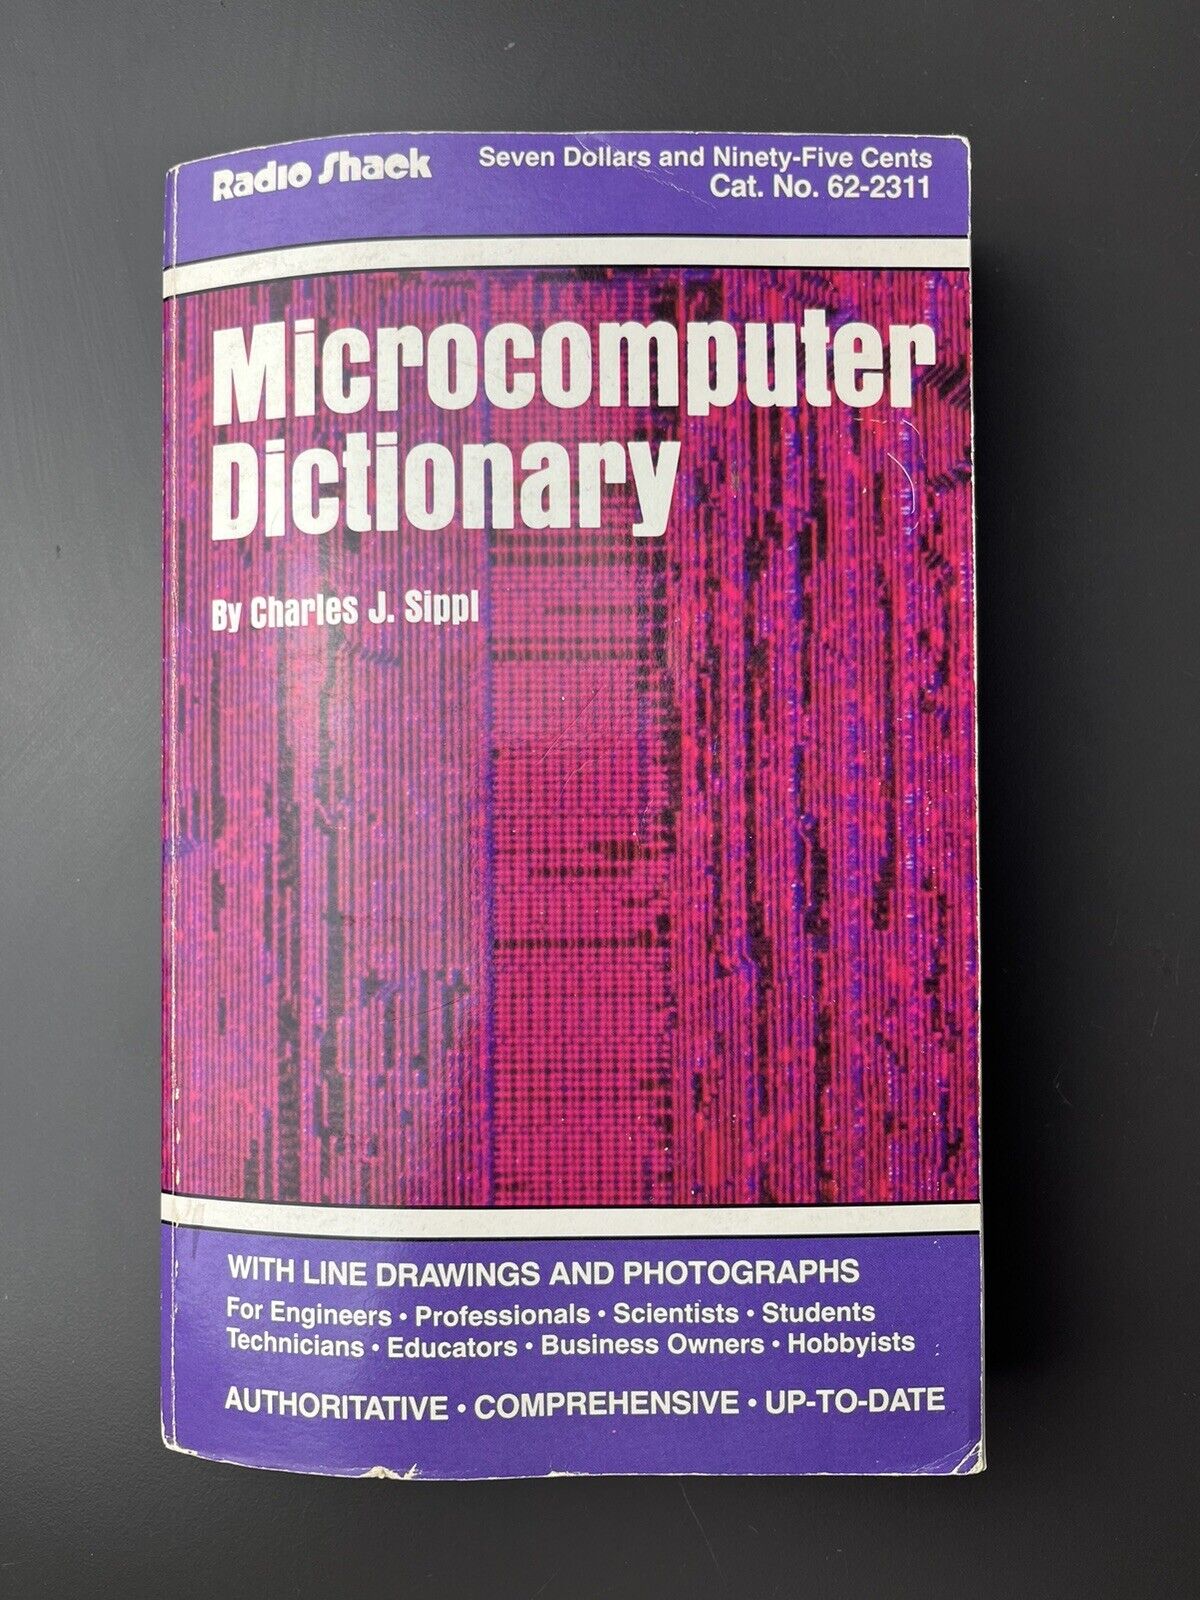 Radio Shack's Microcomputer Dictionary CAT 62-2311